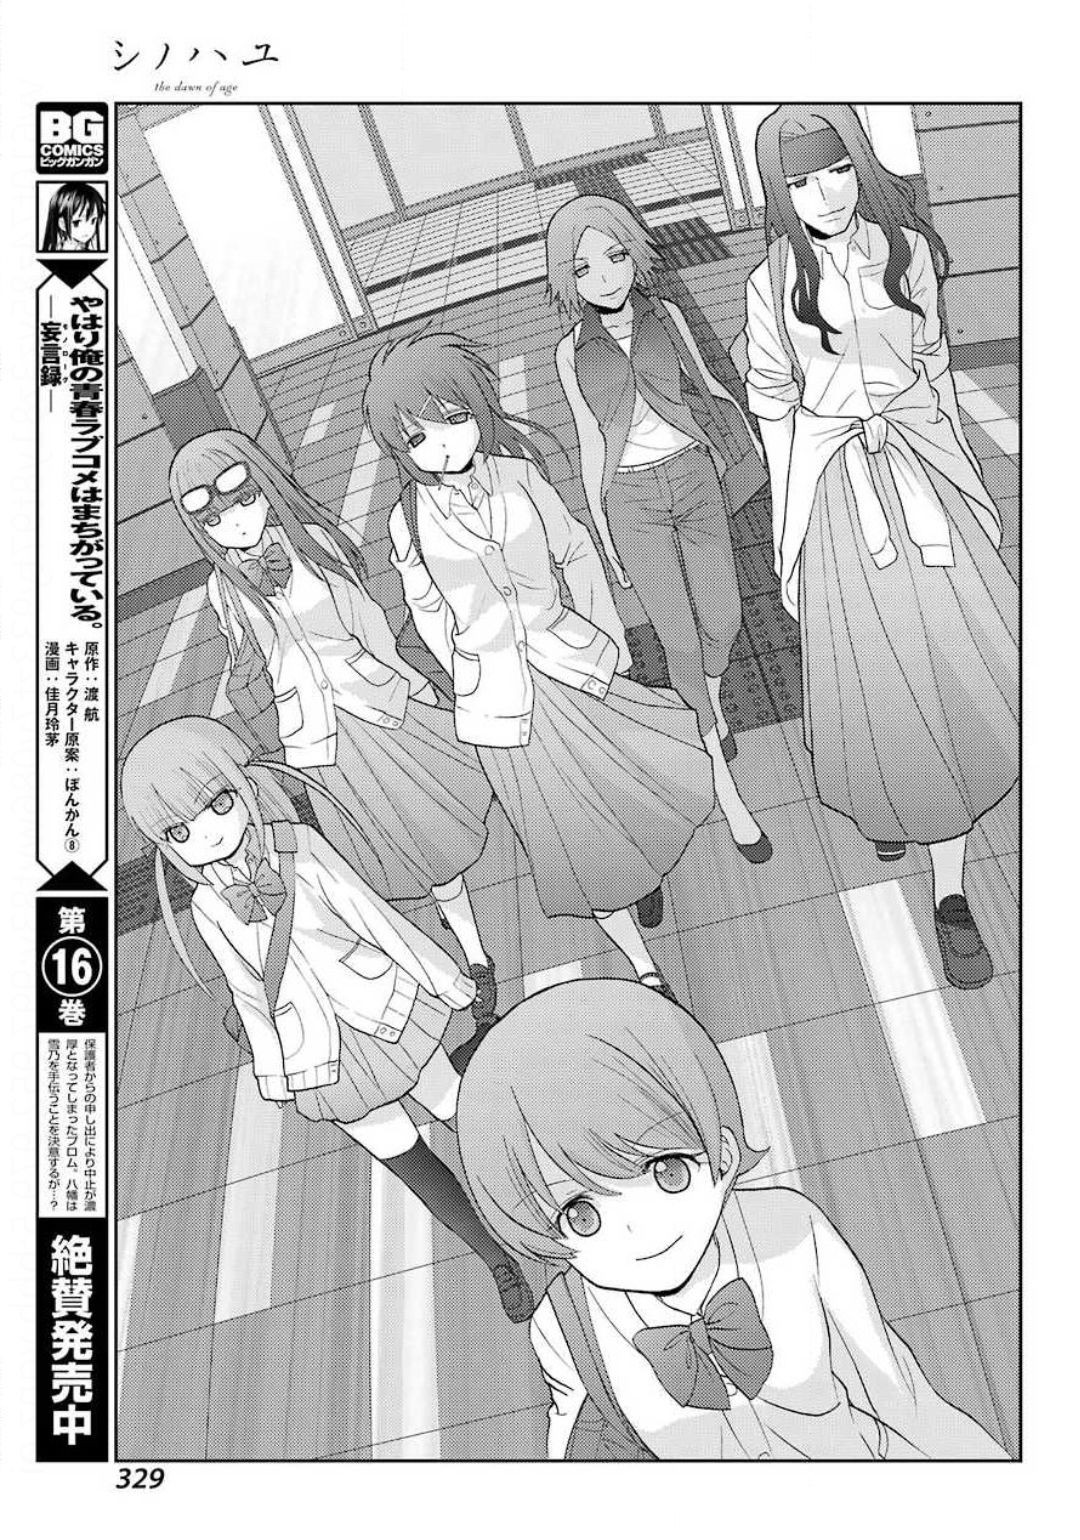 Shinohayu - The Dawn of Age Manga - Chapter 079 - Page 19